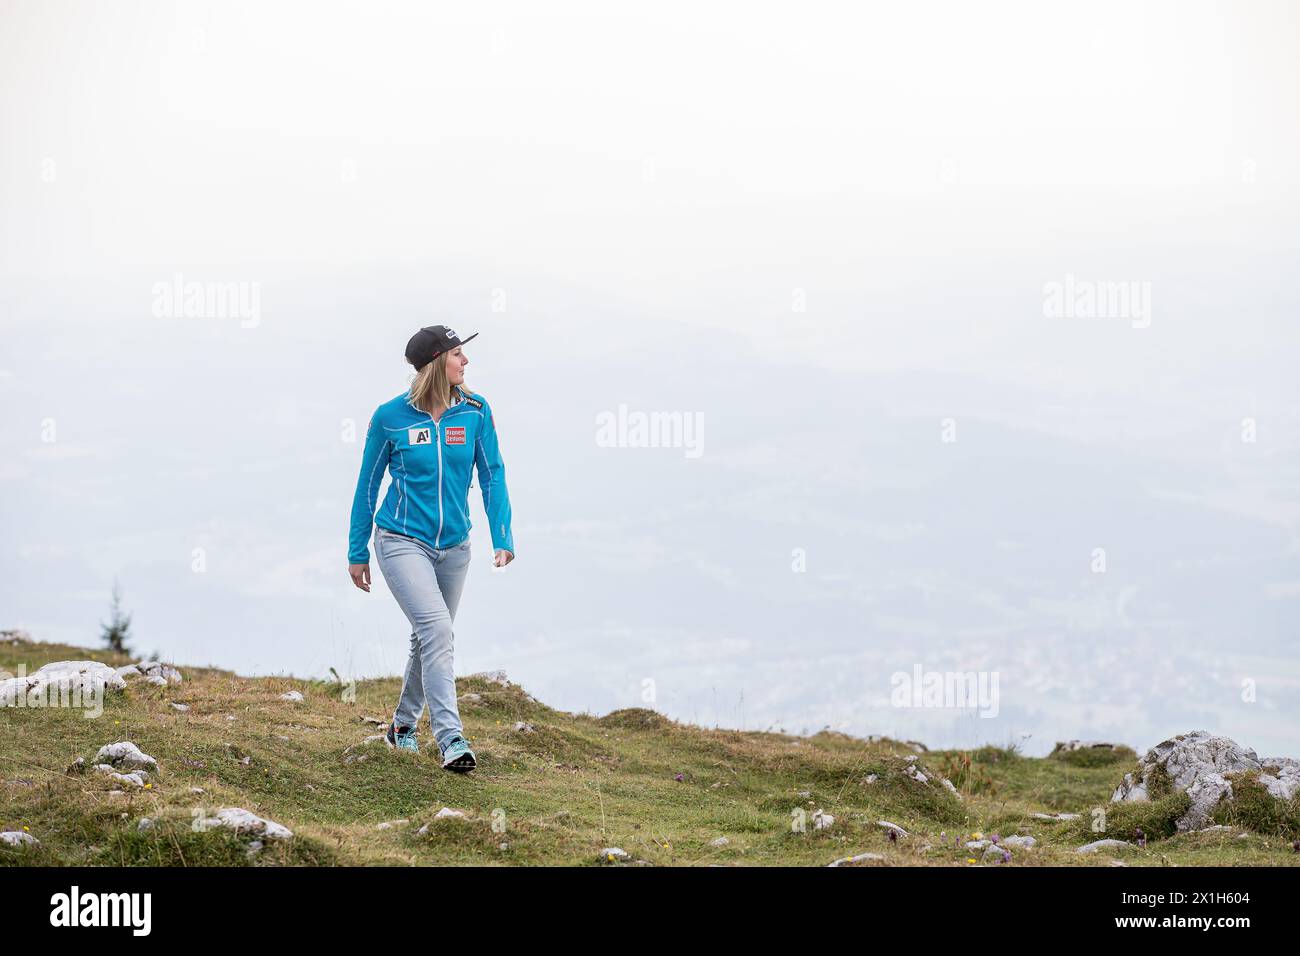 The Austrian skier Cornelia Hütter, poses during a photo shoot at St. Redegund on Schöckl near Graz, Austria, on 26 th September 2016. PICTURE: Cornelia Hütter - 20160926 PD2215 - Rechteinfo: Rights Managed (RM) Stock Photo